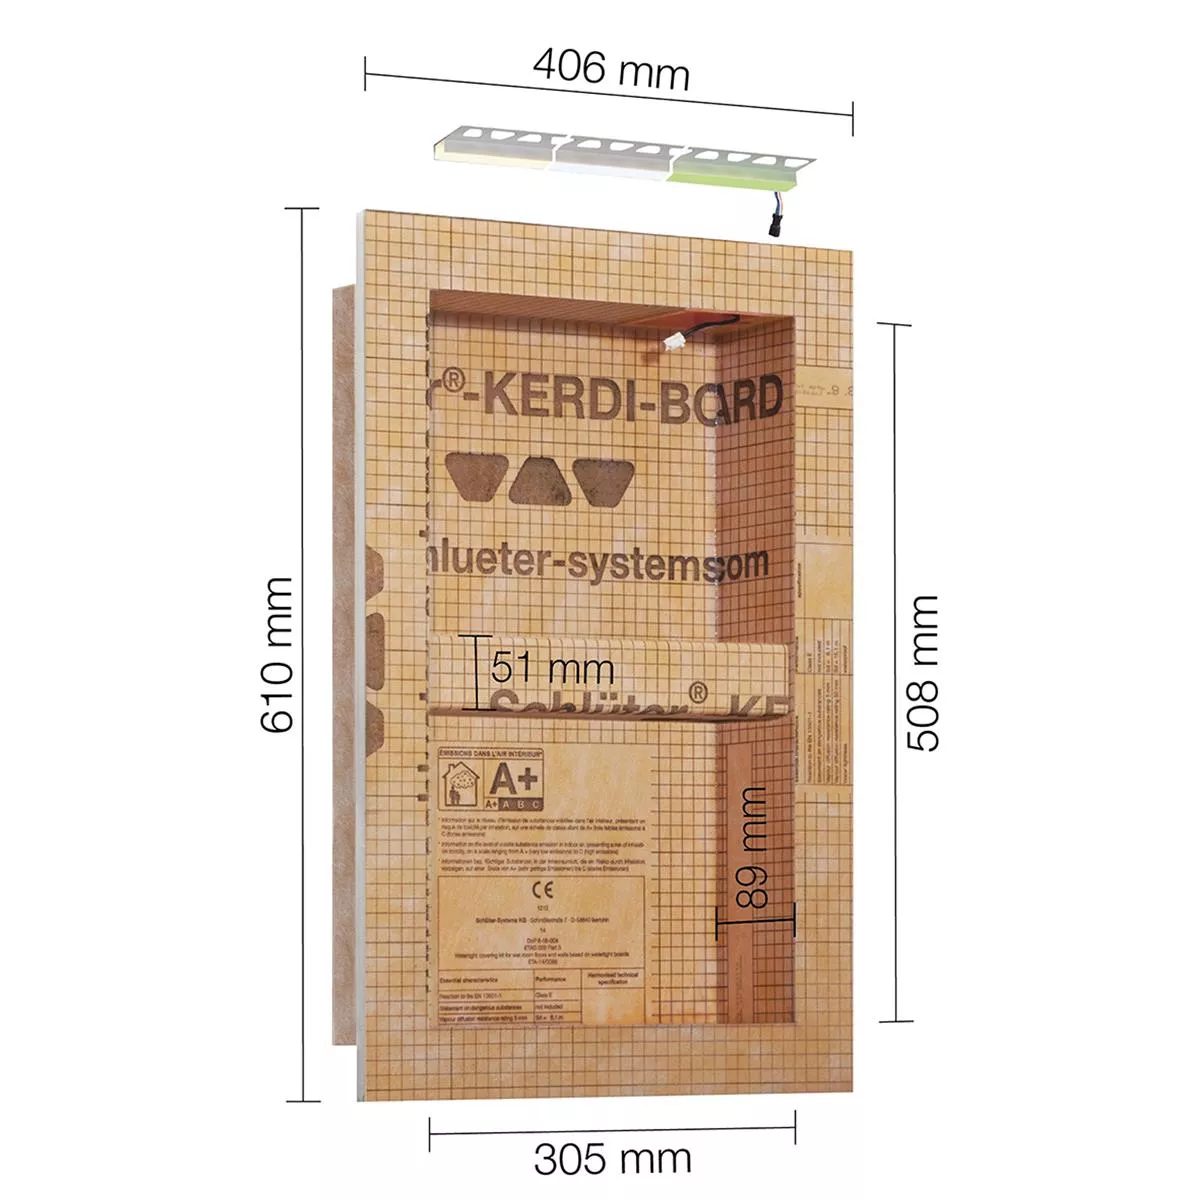 Schlüter Kerdi Board NLT ниша комплект LED осветление RGB 30.5x50.8x0.89 cm